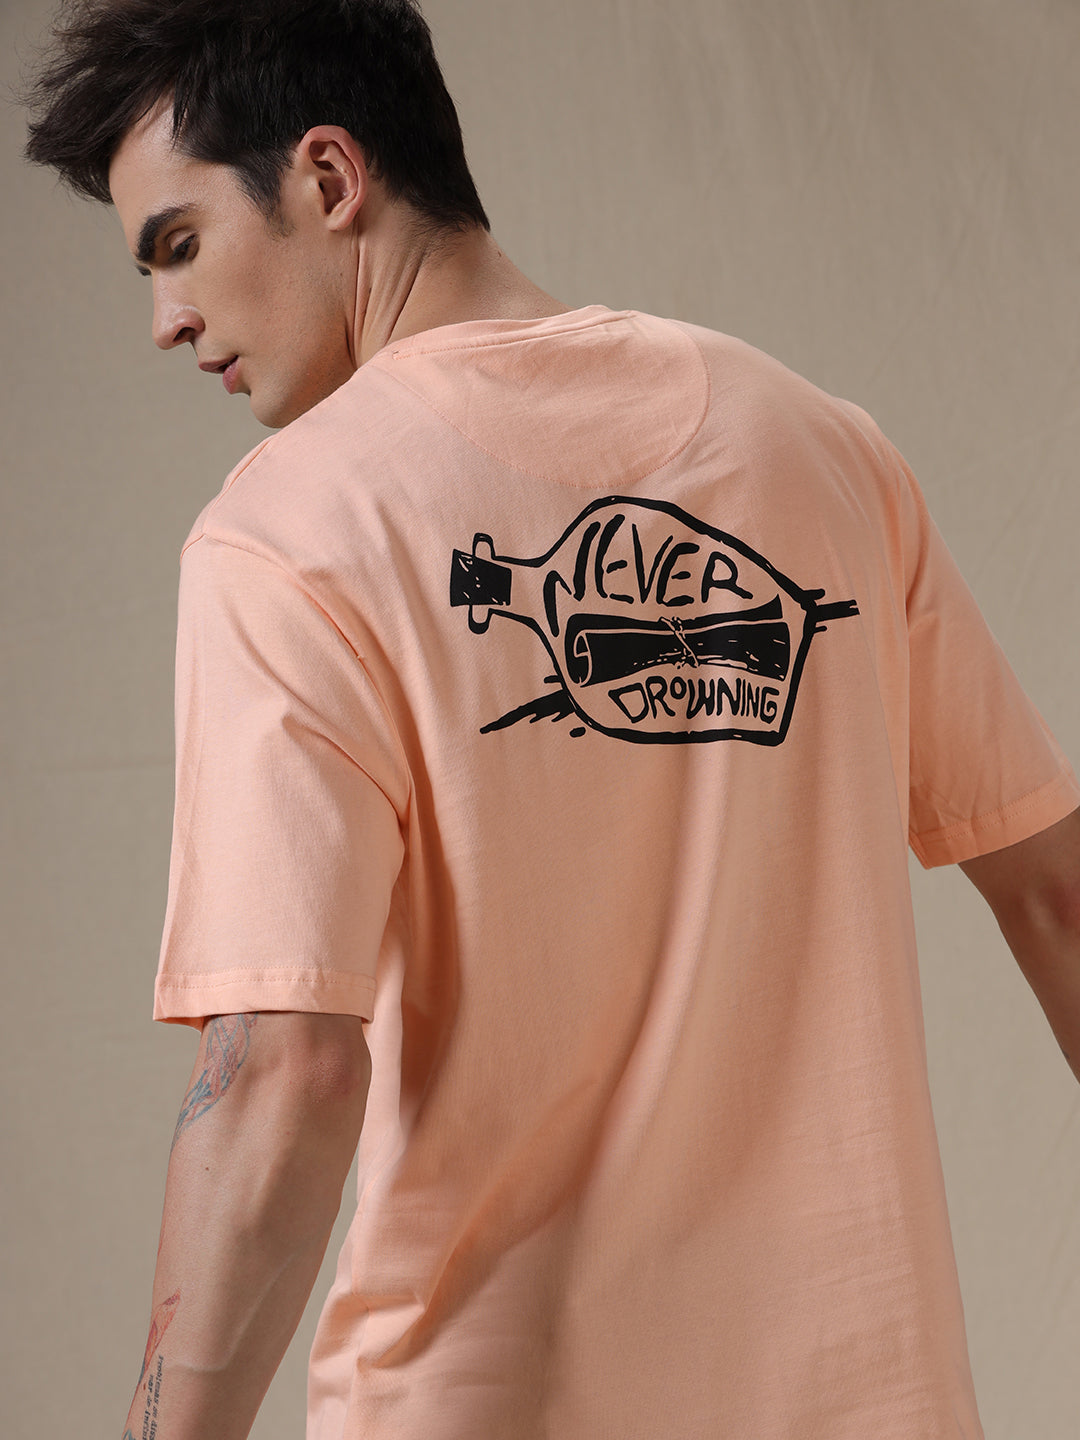 Never Drowning Peach T-Shirt